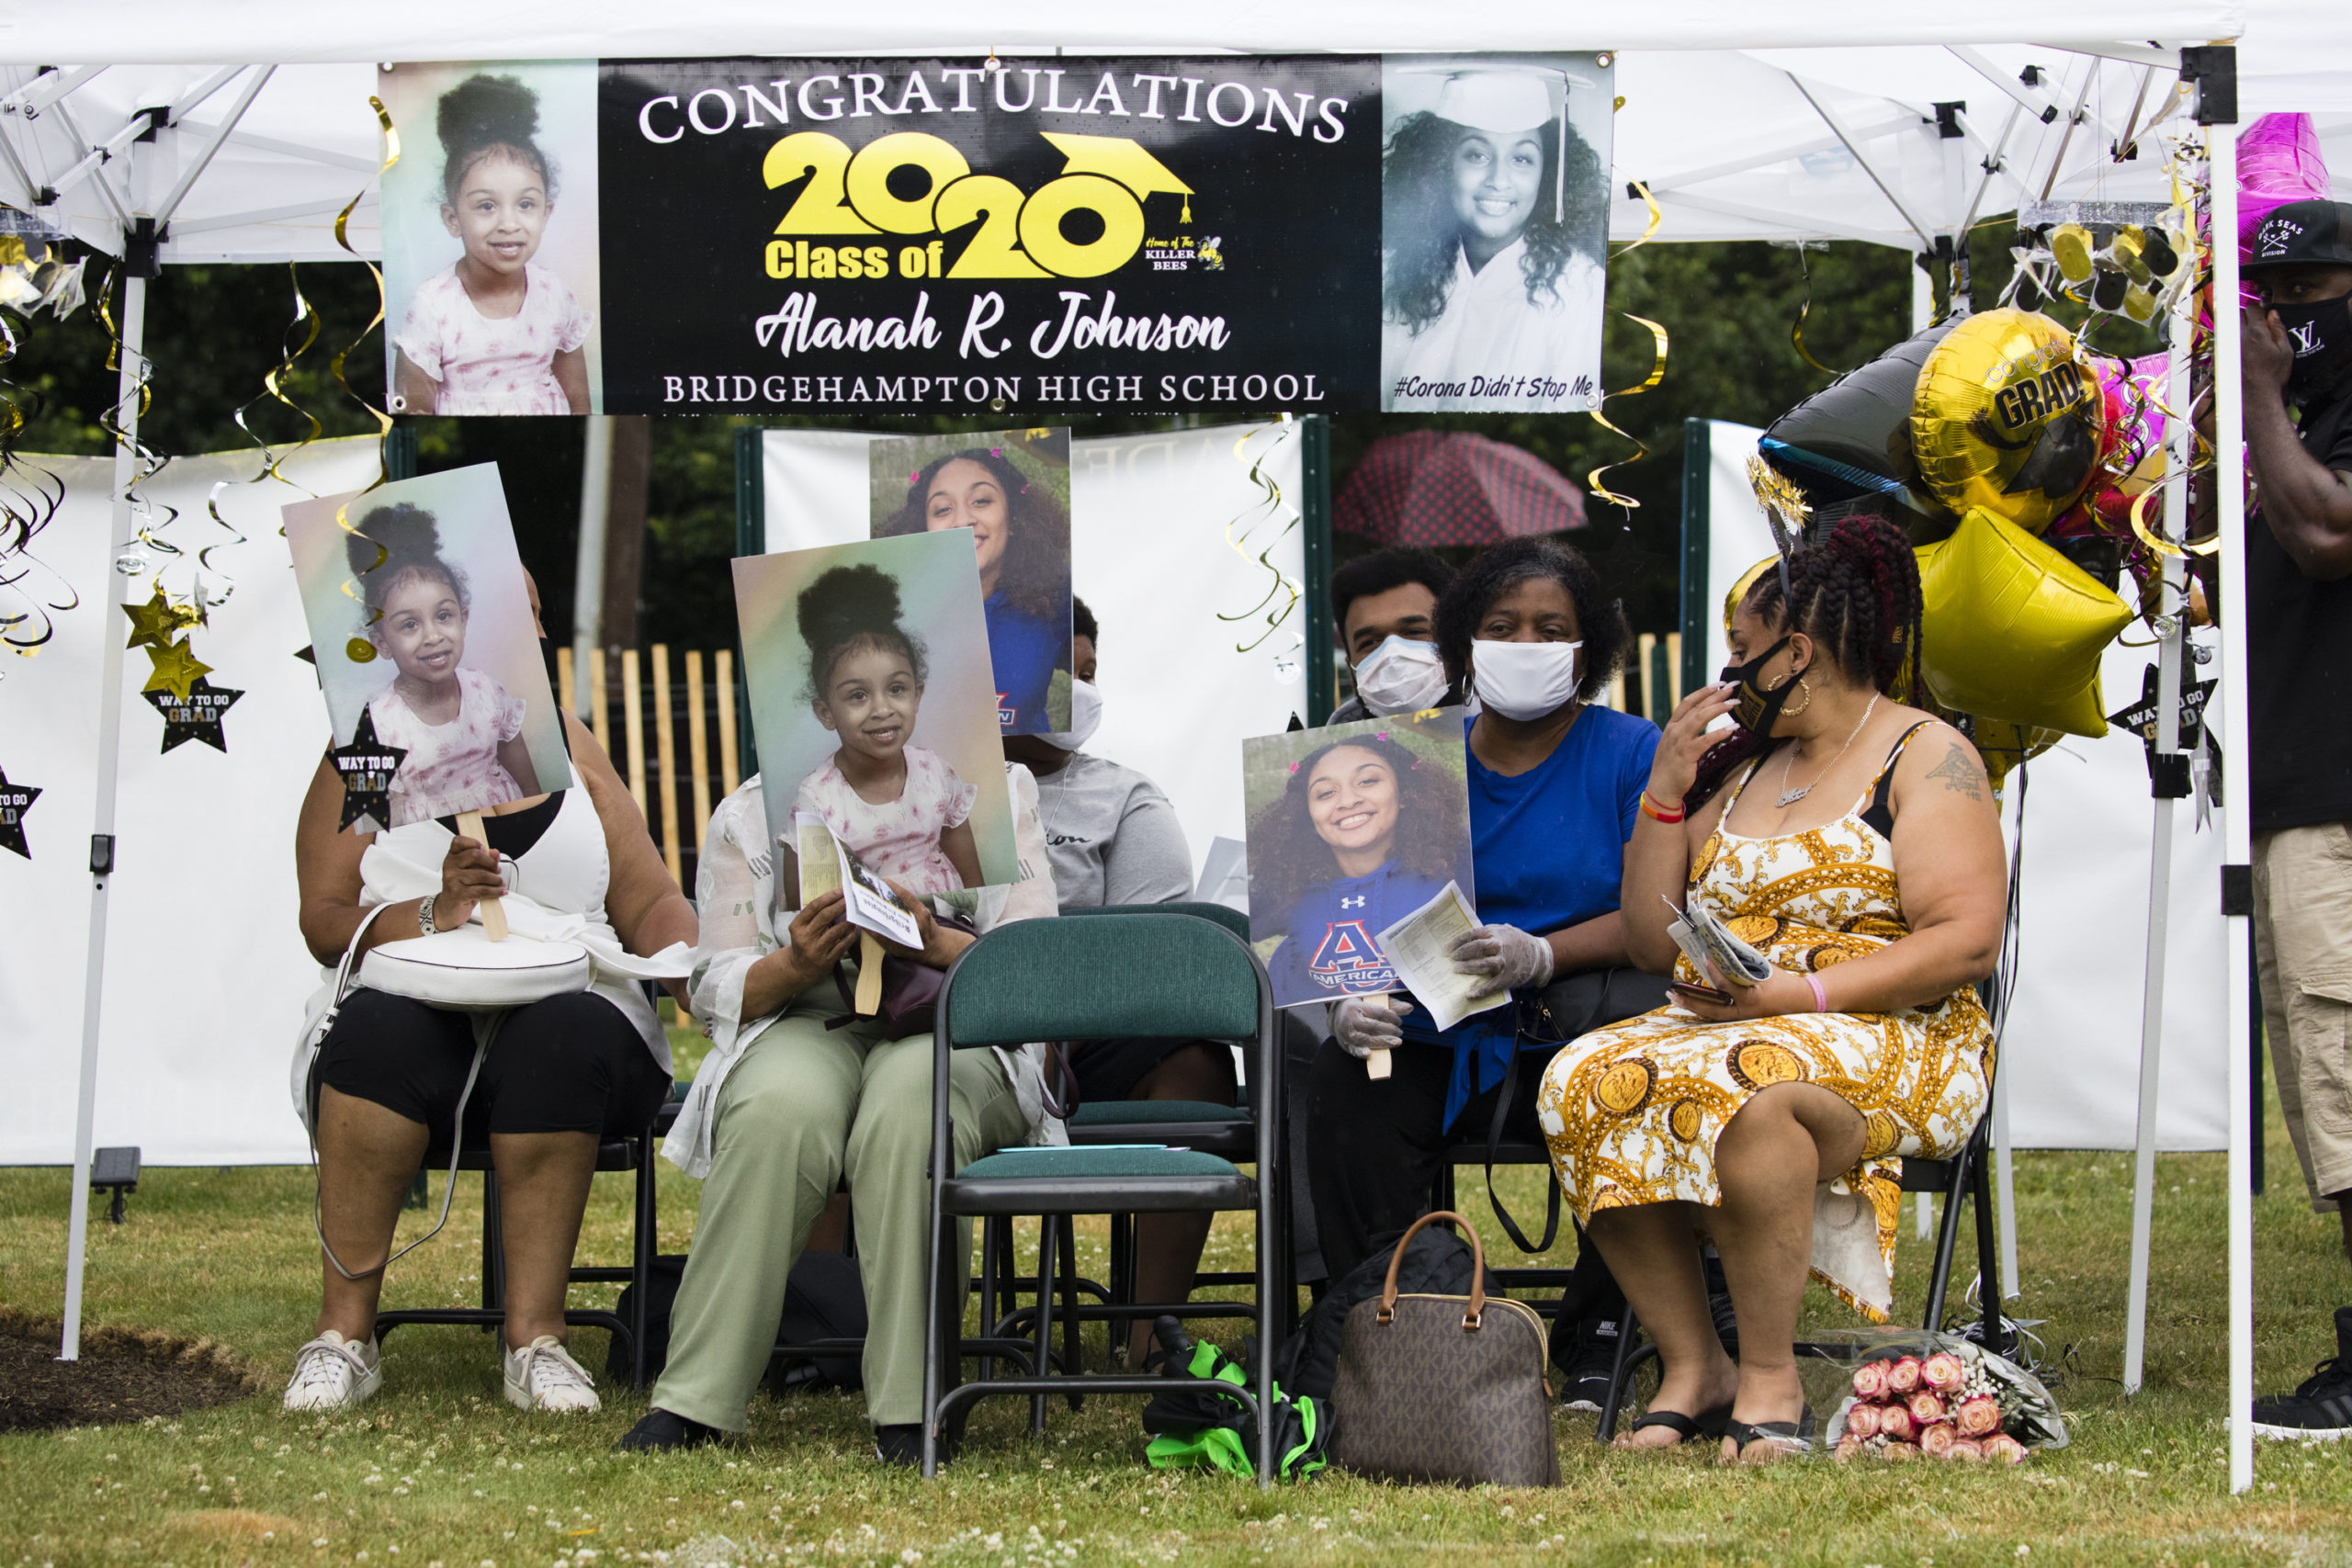 Alanah Johnson's family at the Bridgehampton School graduation ceremony on Saturday.